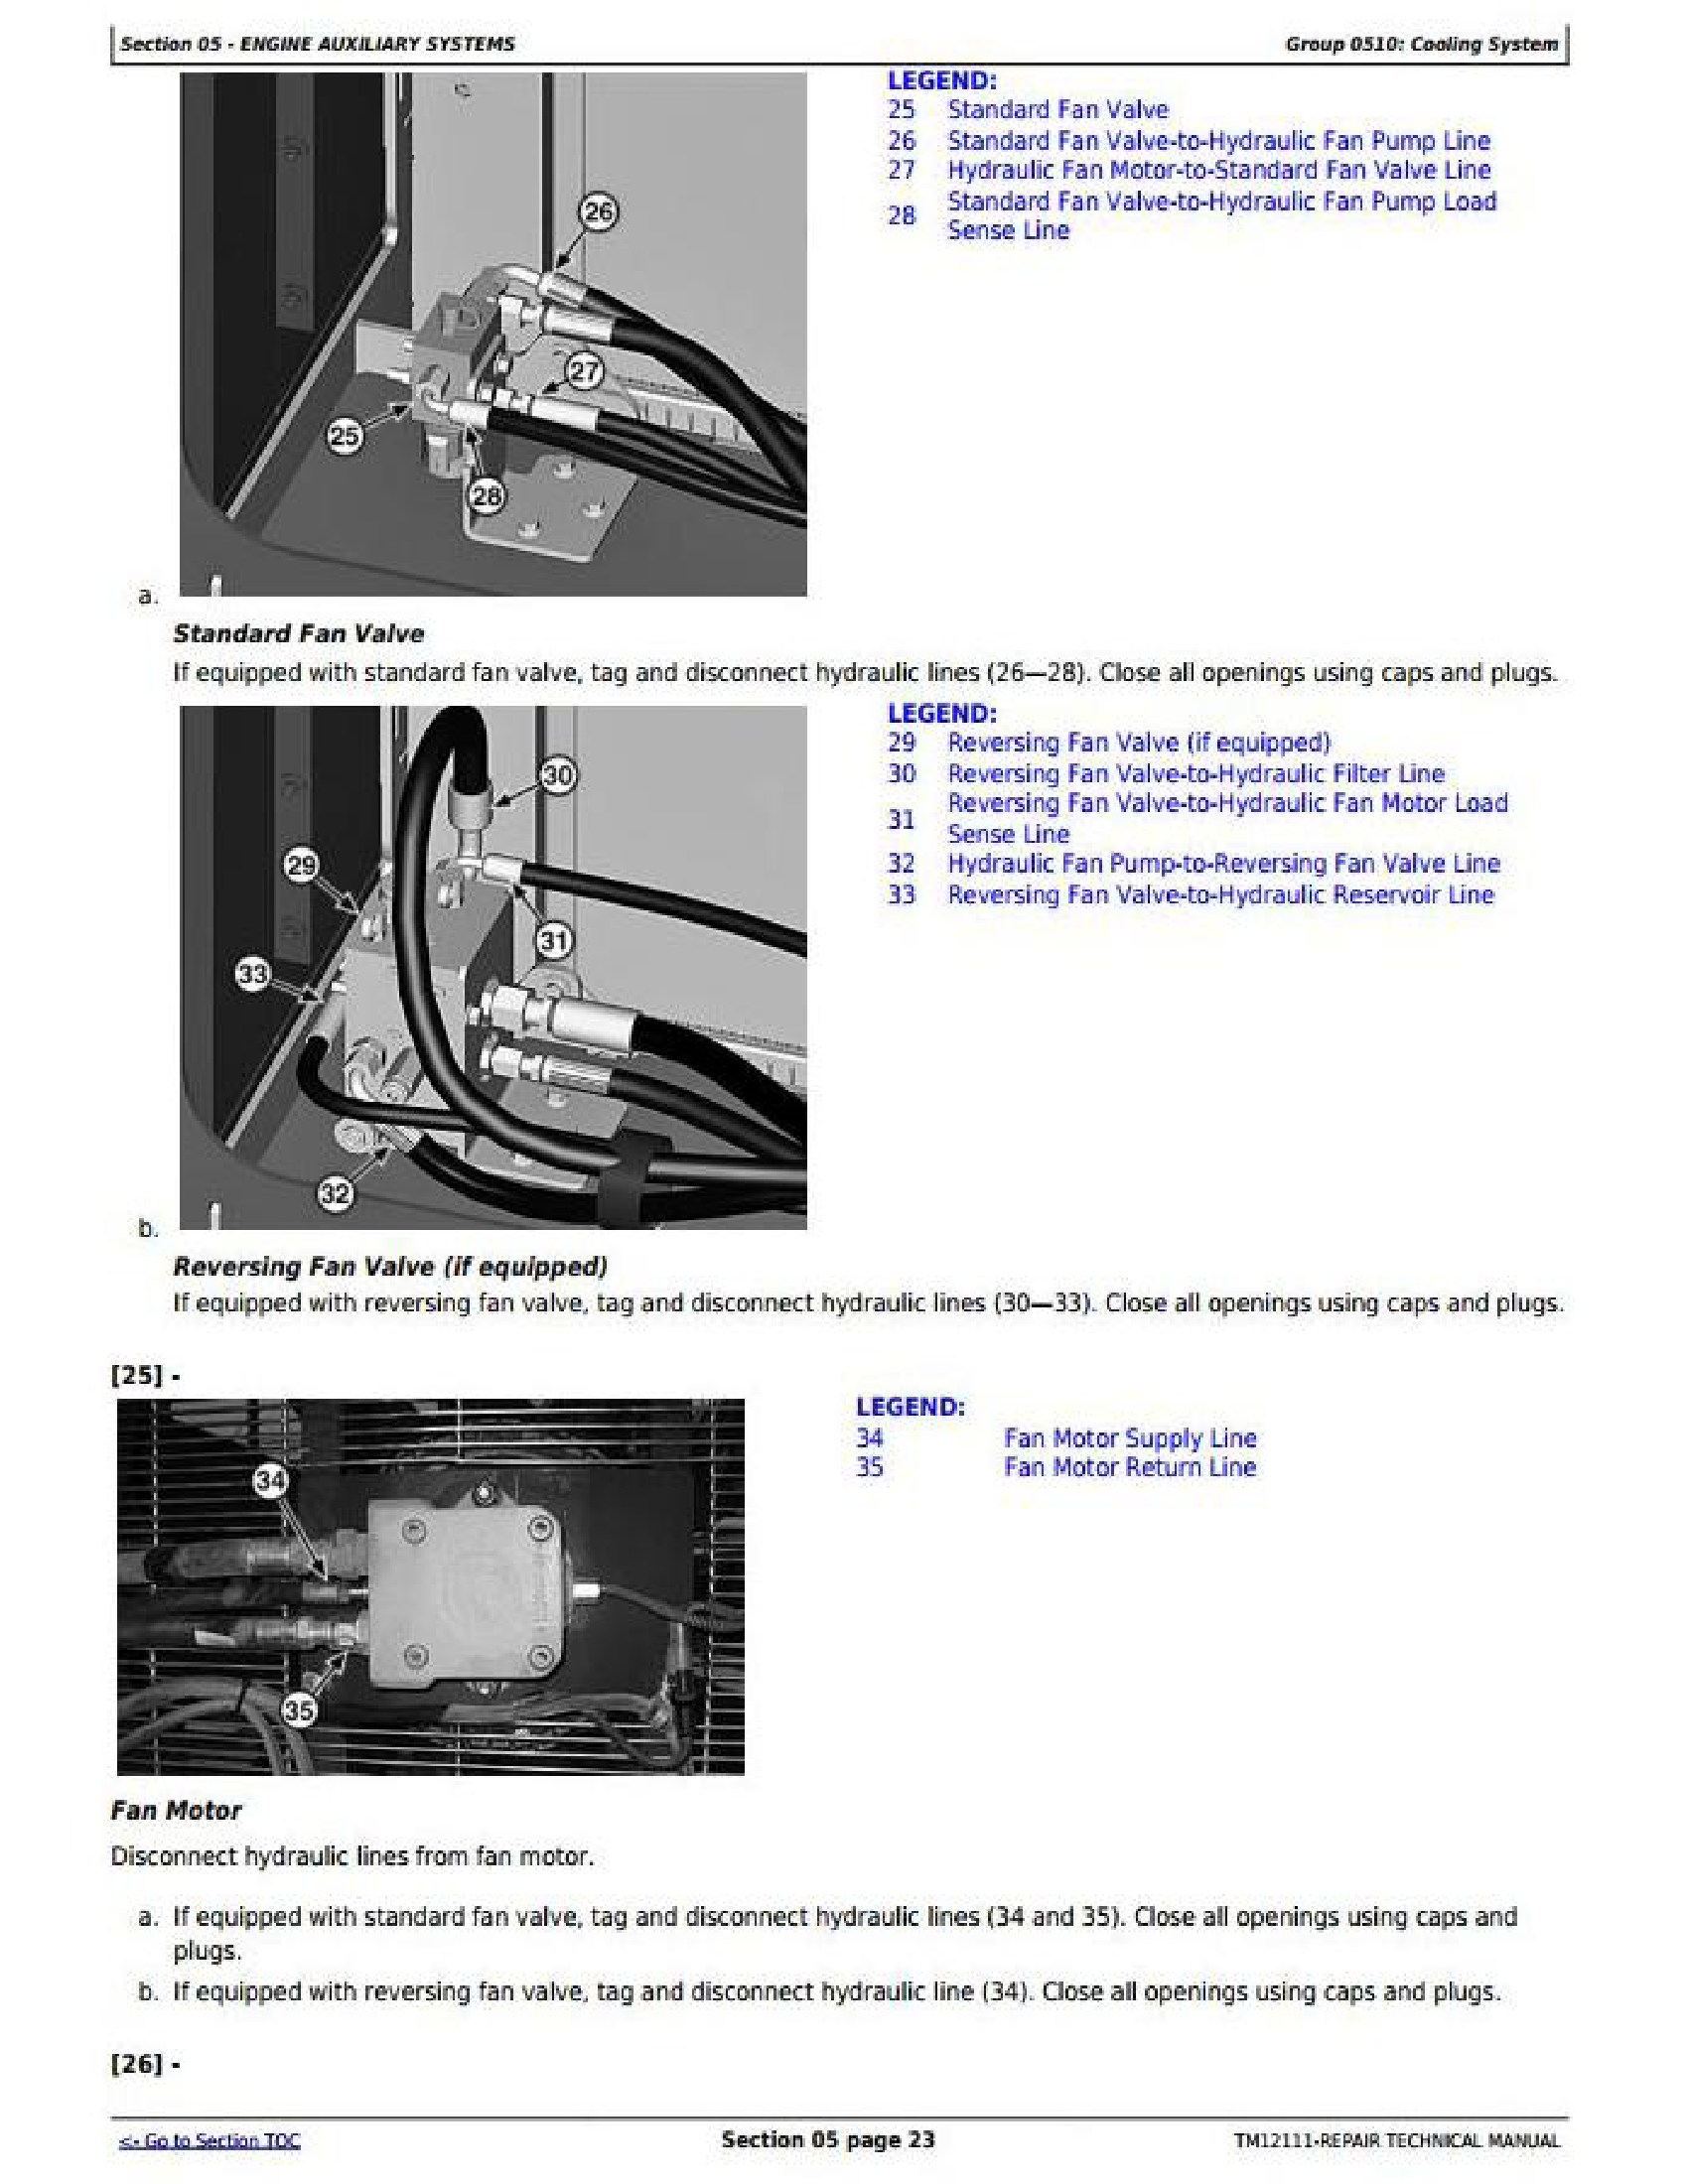 John Deere 17.542HS manual pdf